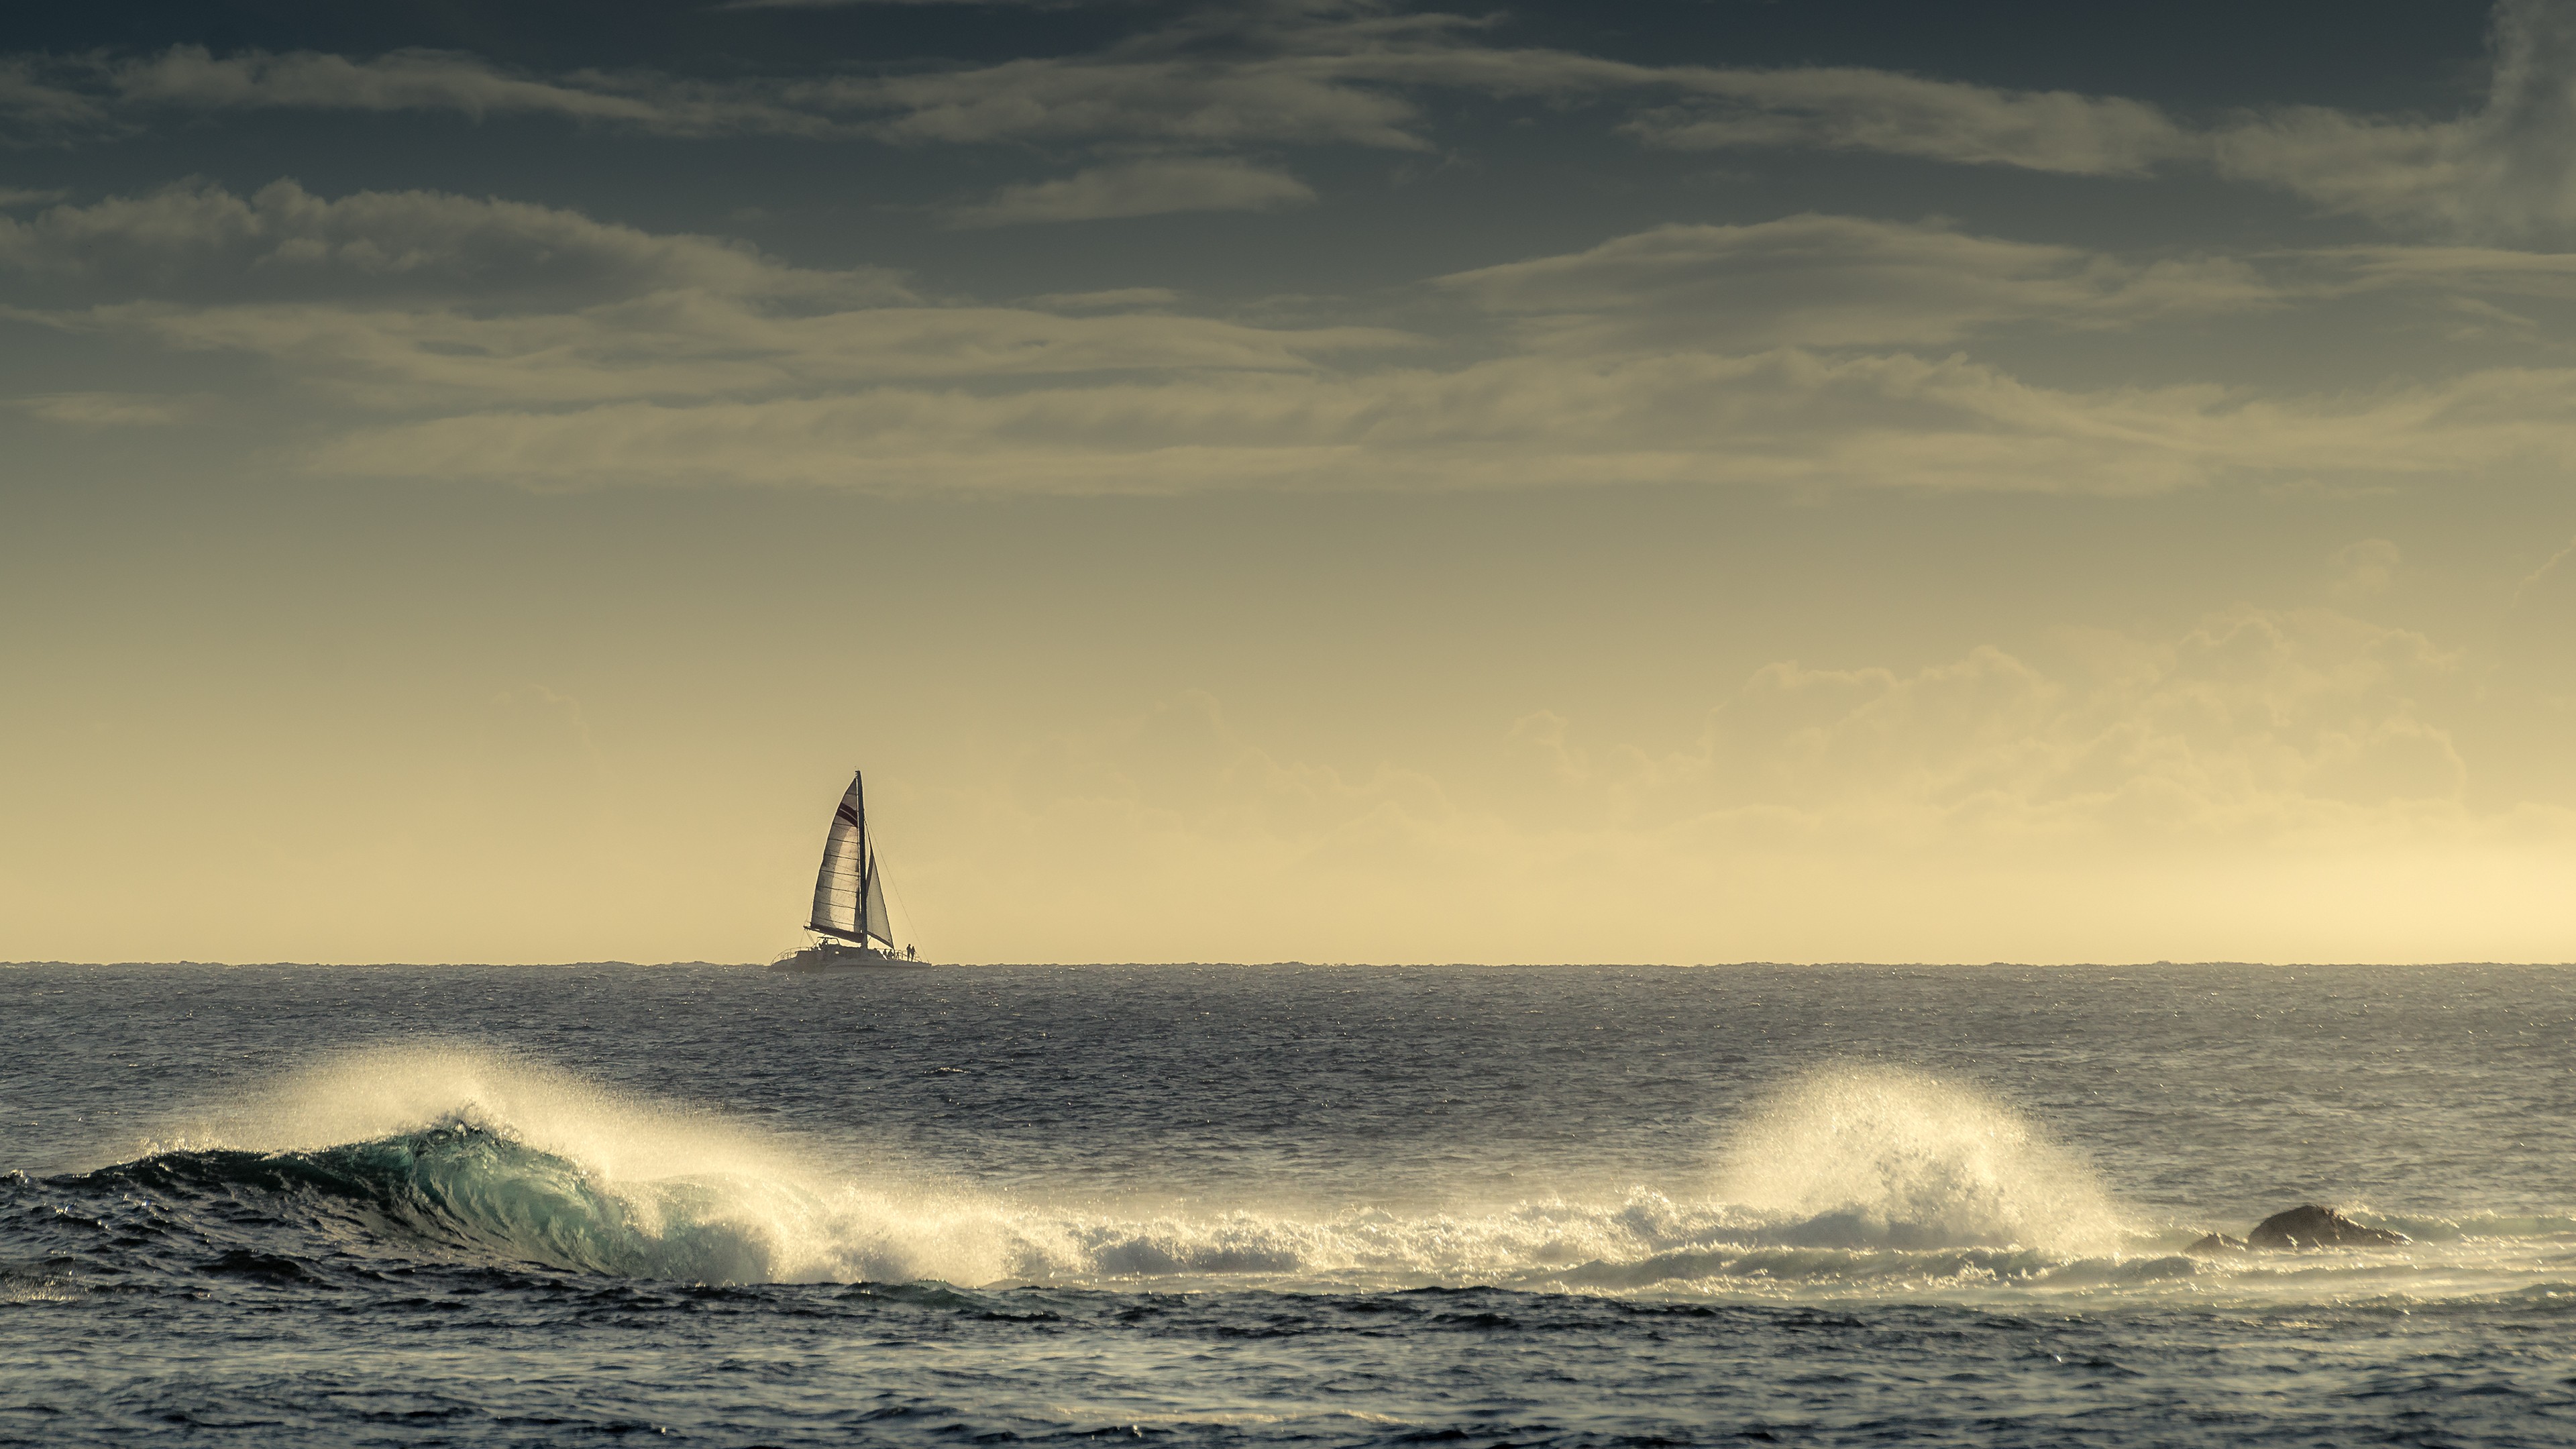 General 3840x2160 sea boat sailboats waves horizon catamaran vehicle sky nature outdoors